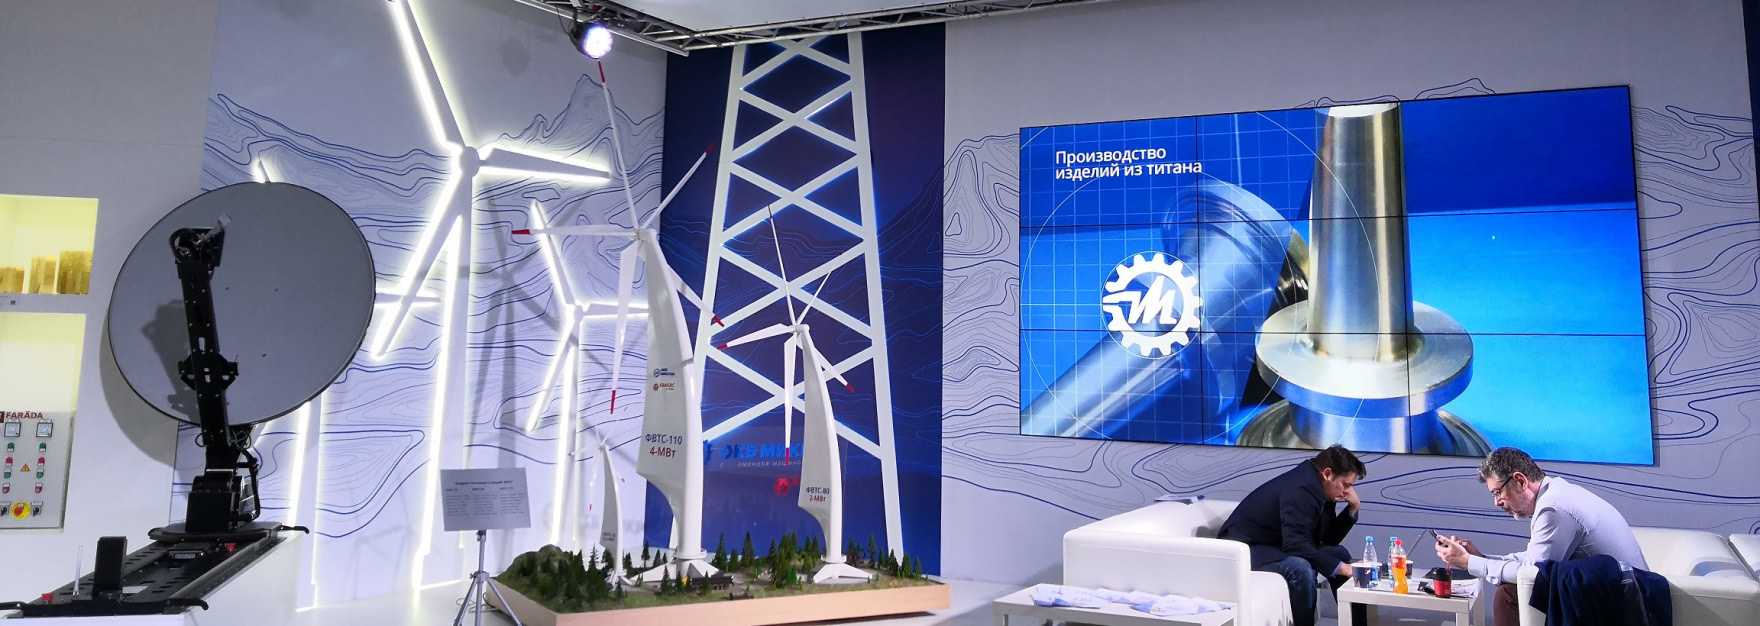 TeRUS takes part in the Krasnoyarsk Economic Forum 2019 KEF-2019